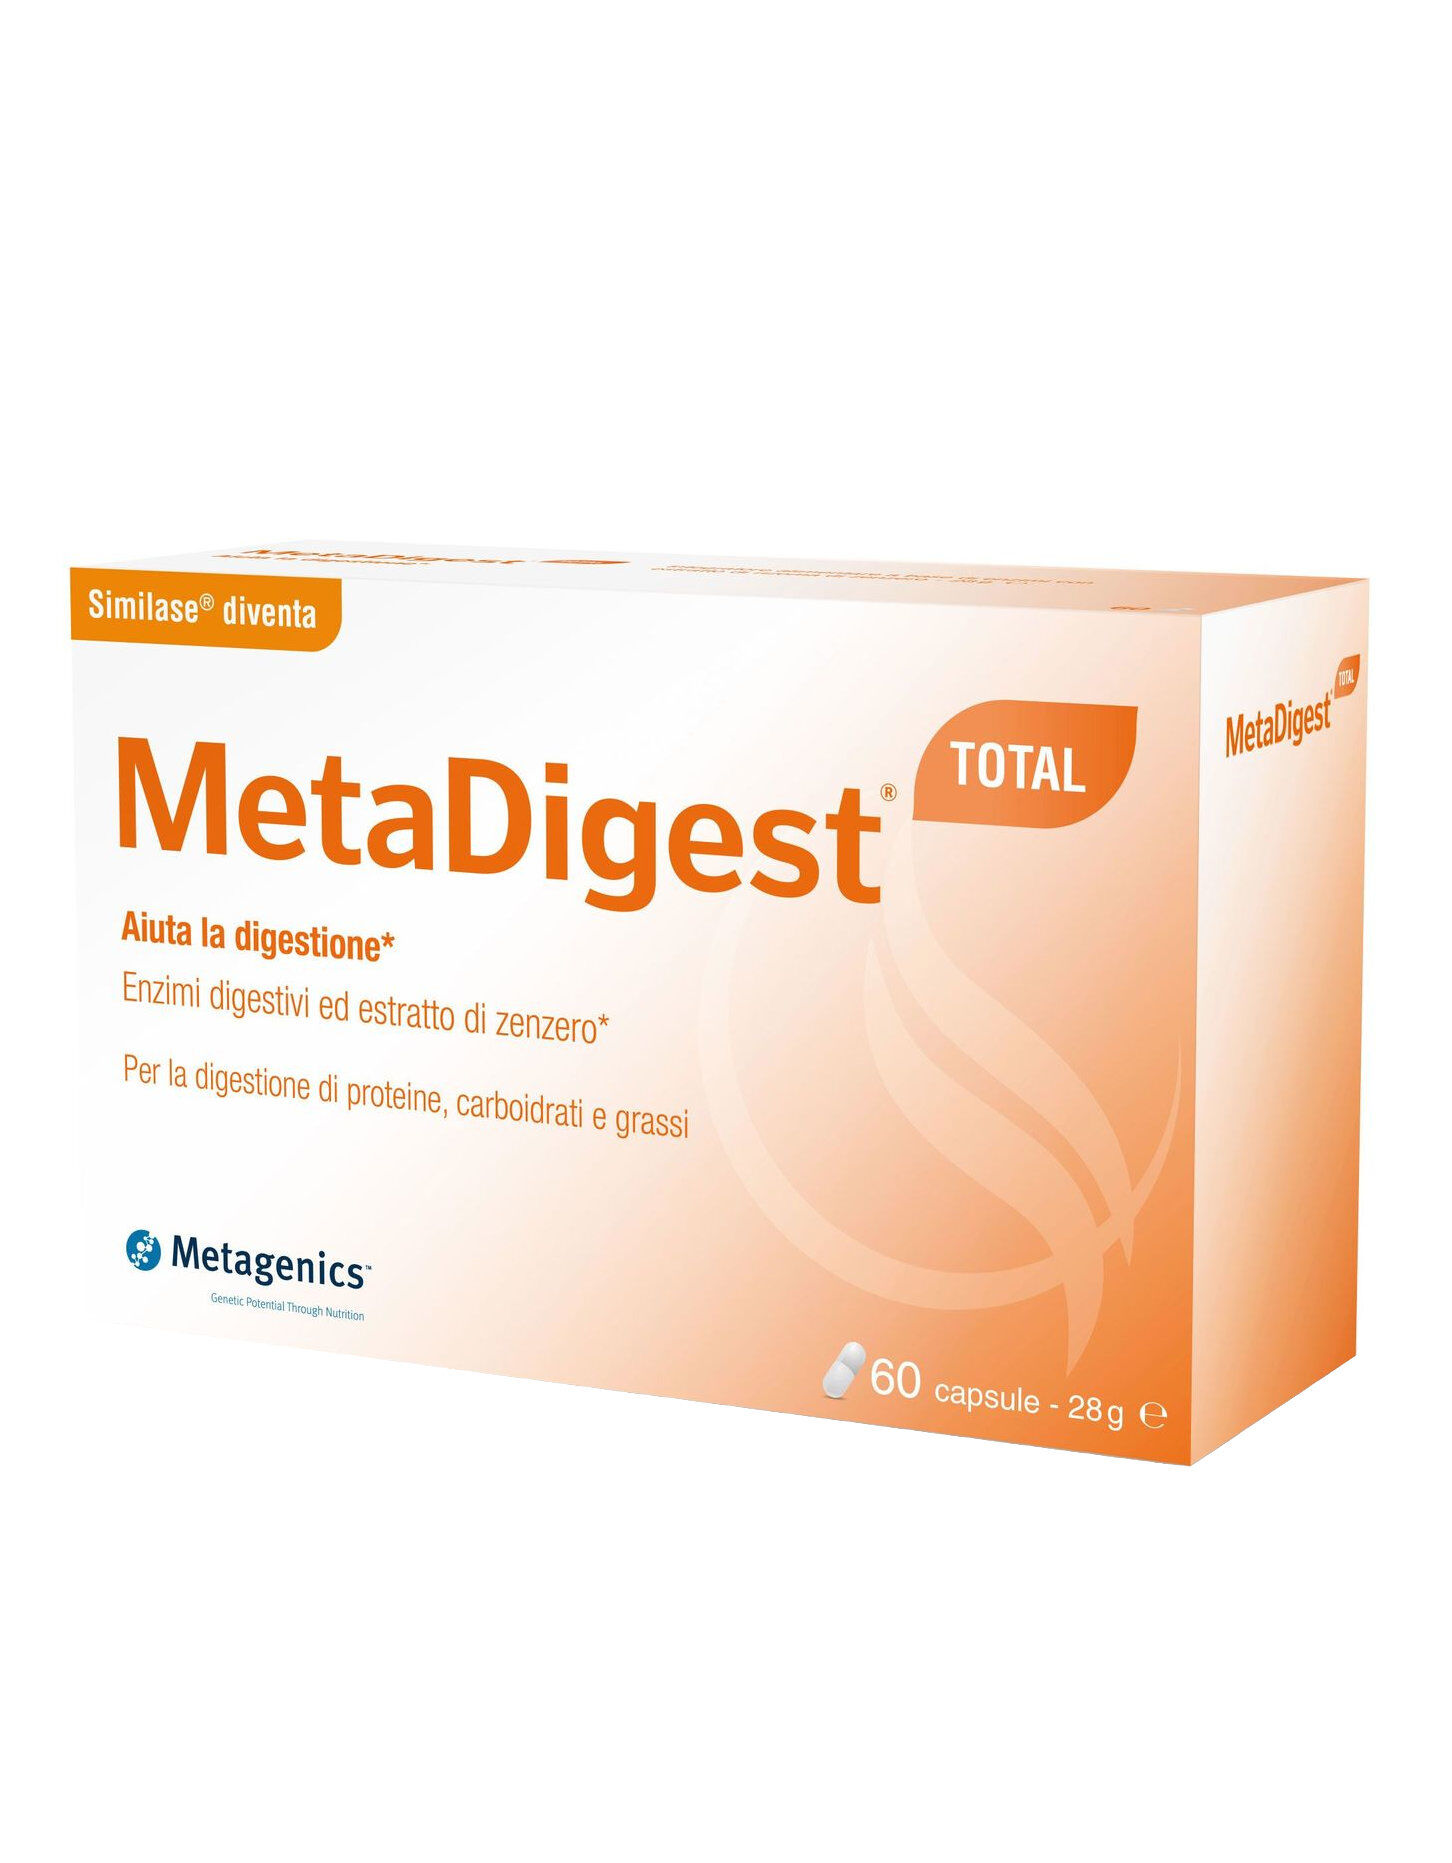 METAGENICS Metadigest Total 60 Capsule